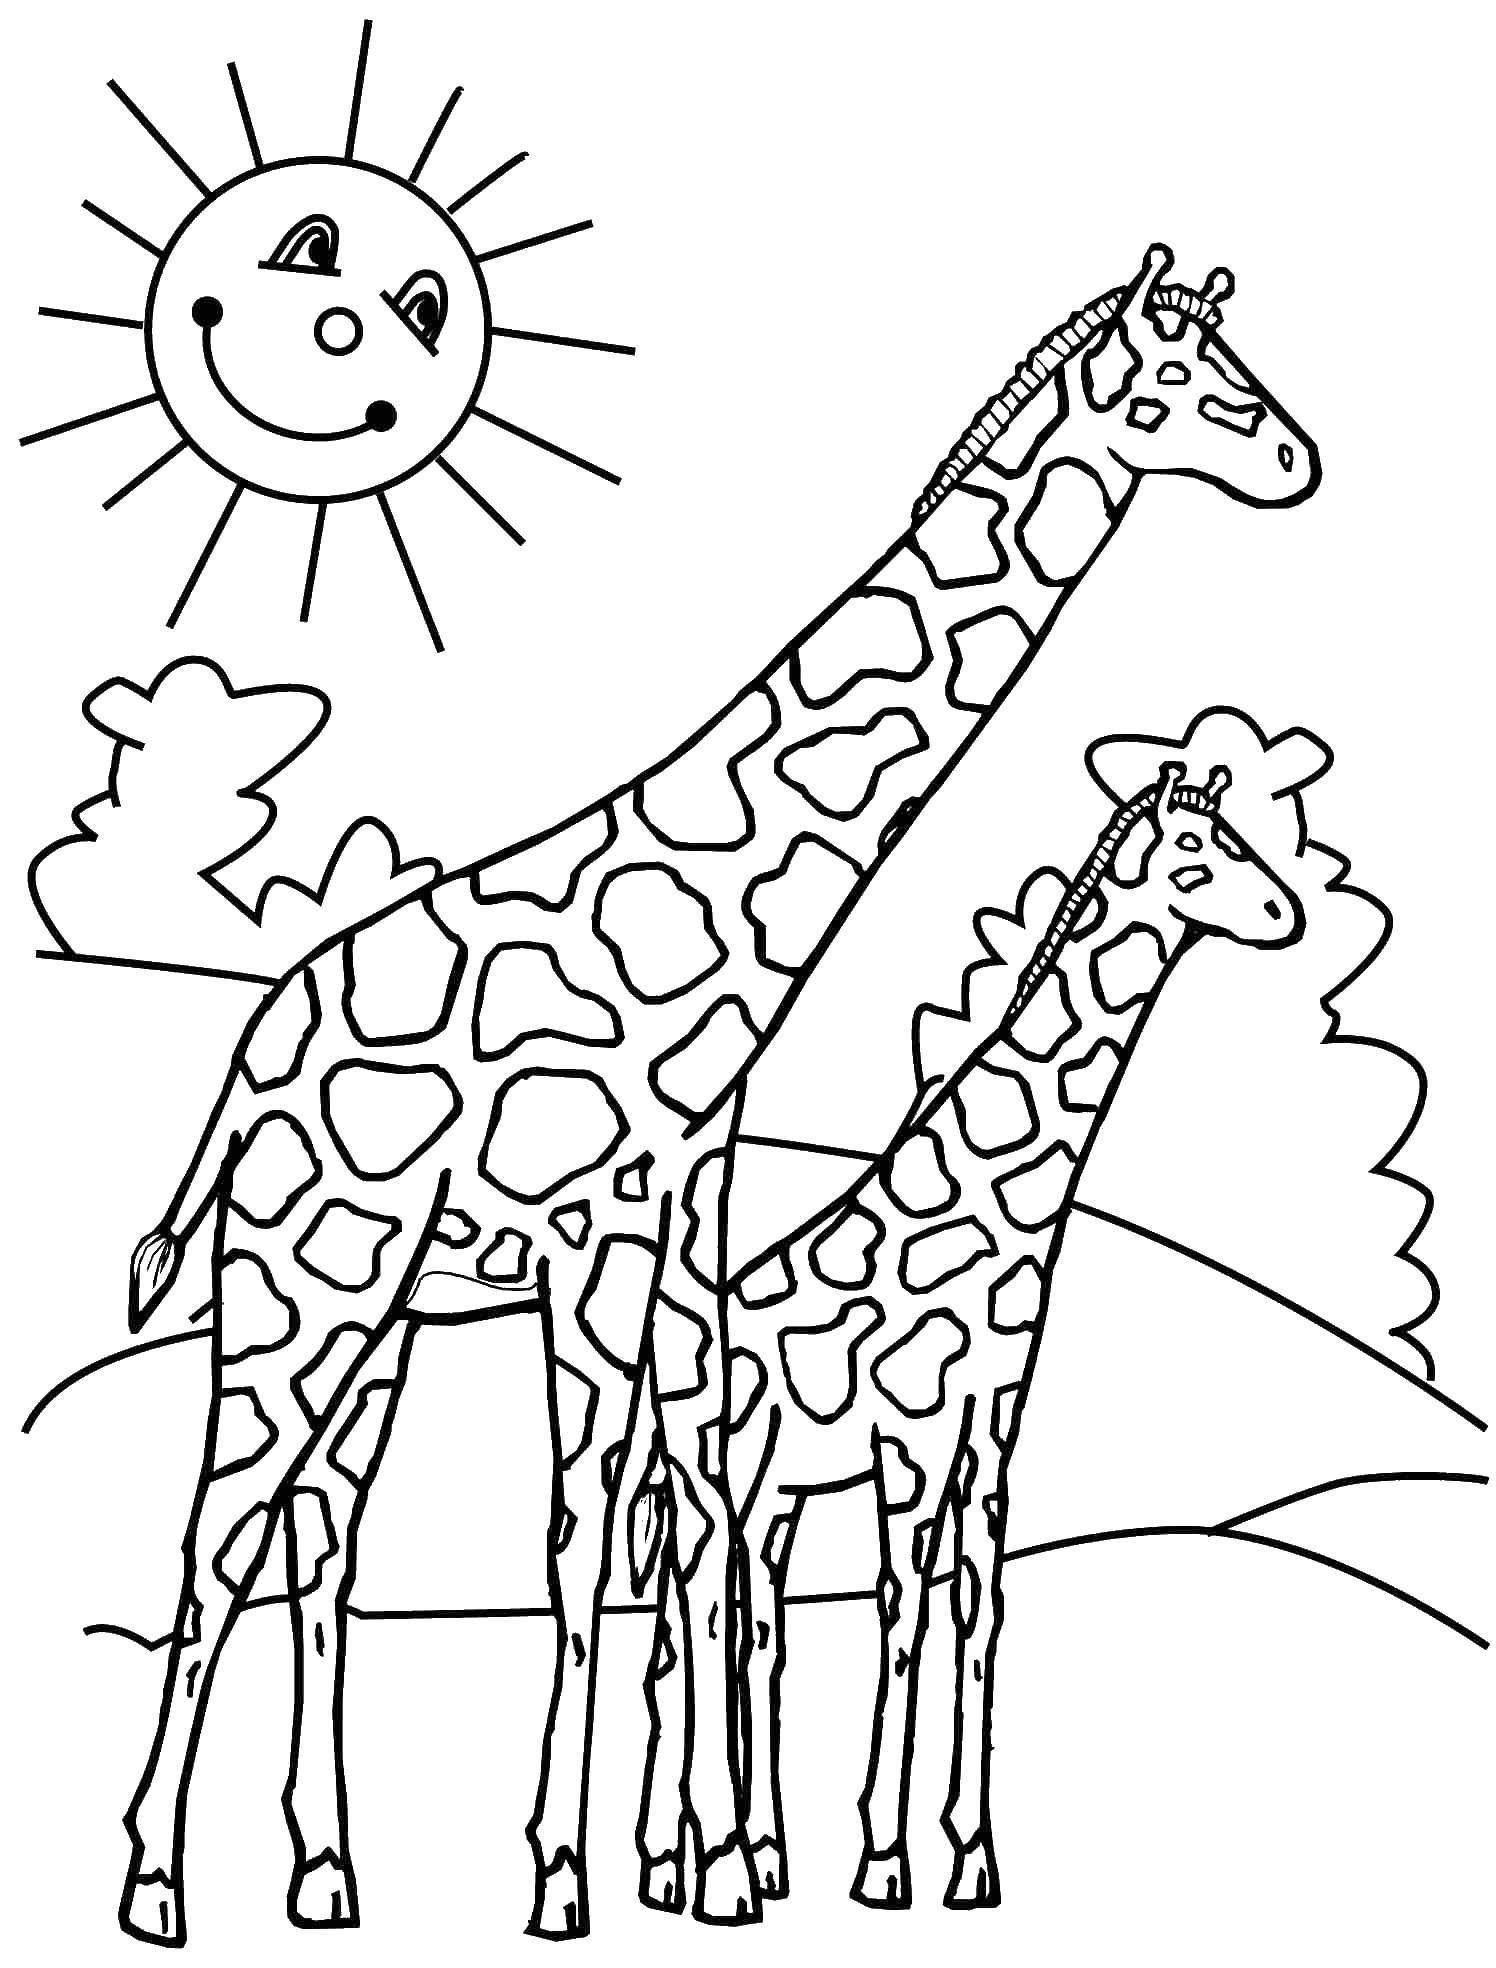 Название: Раскраска Два жирафа. Категория: дикие животные. Теги: дикие животные, жирафы.